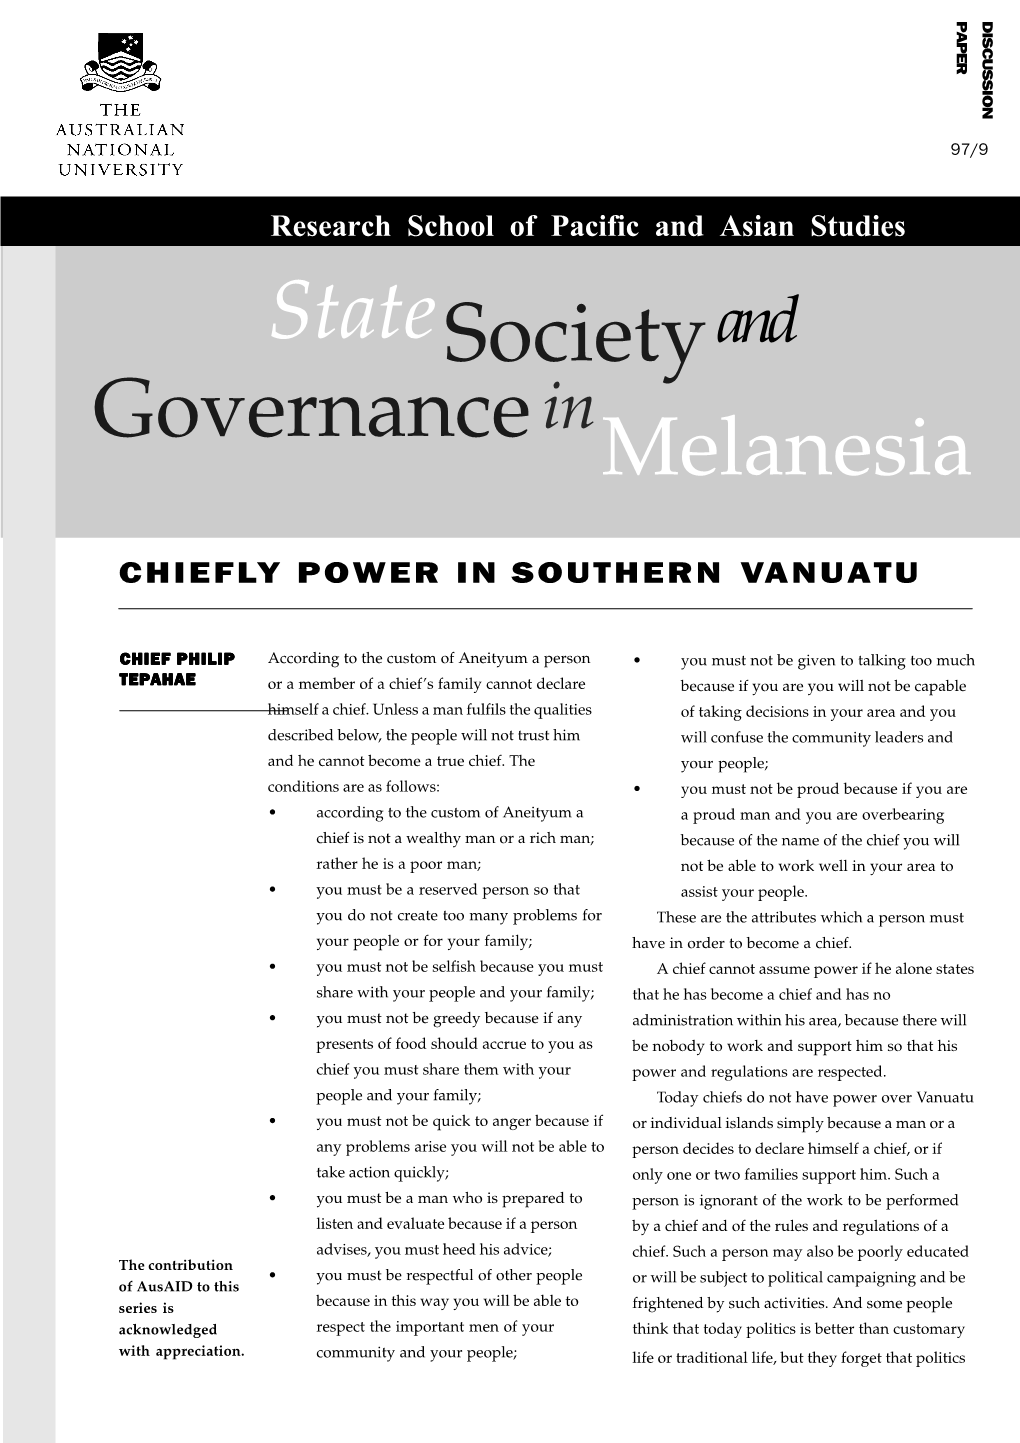 State Societyand Melanesia Governance